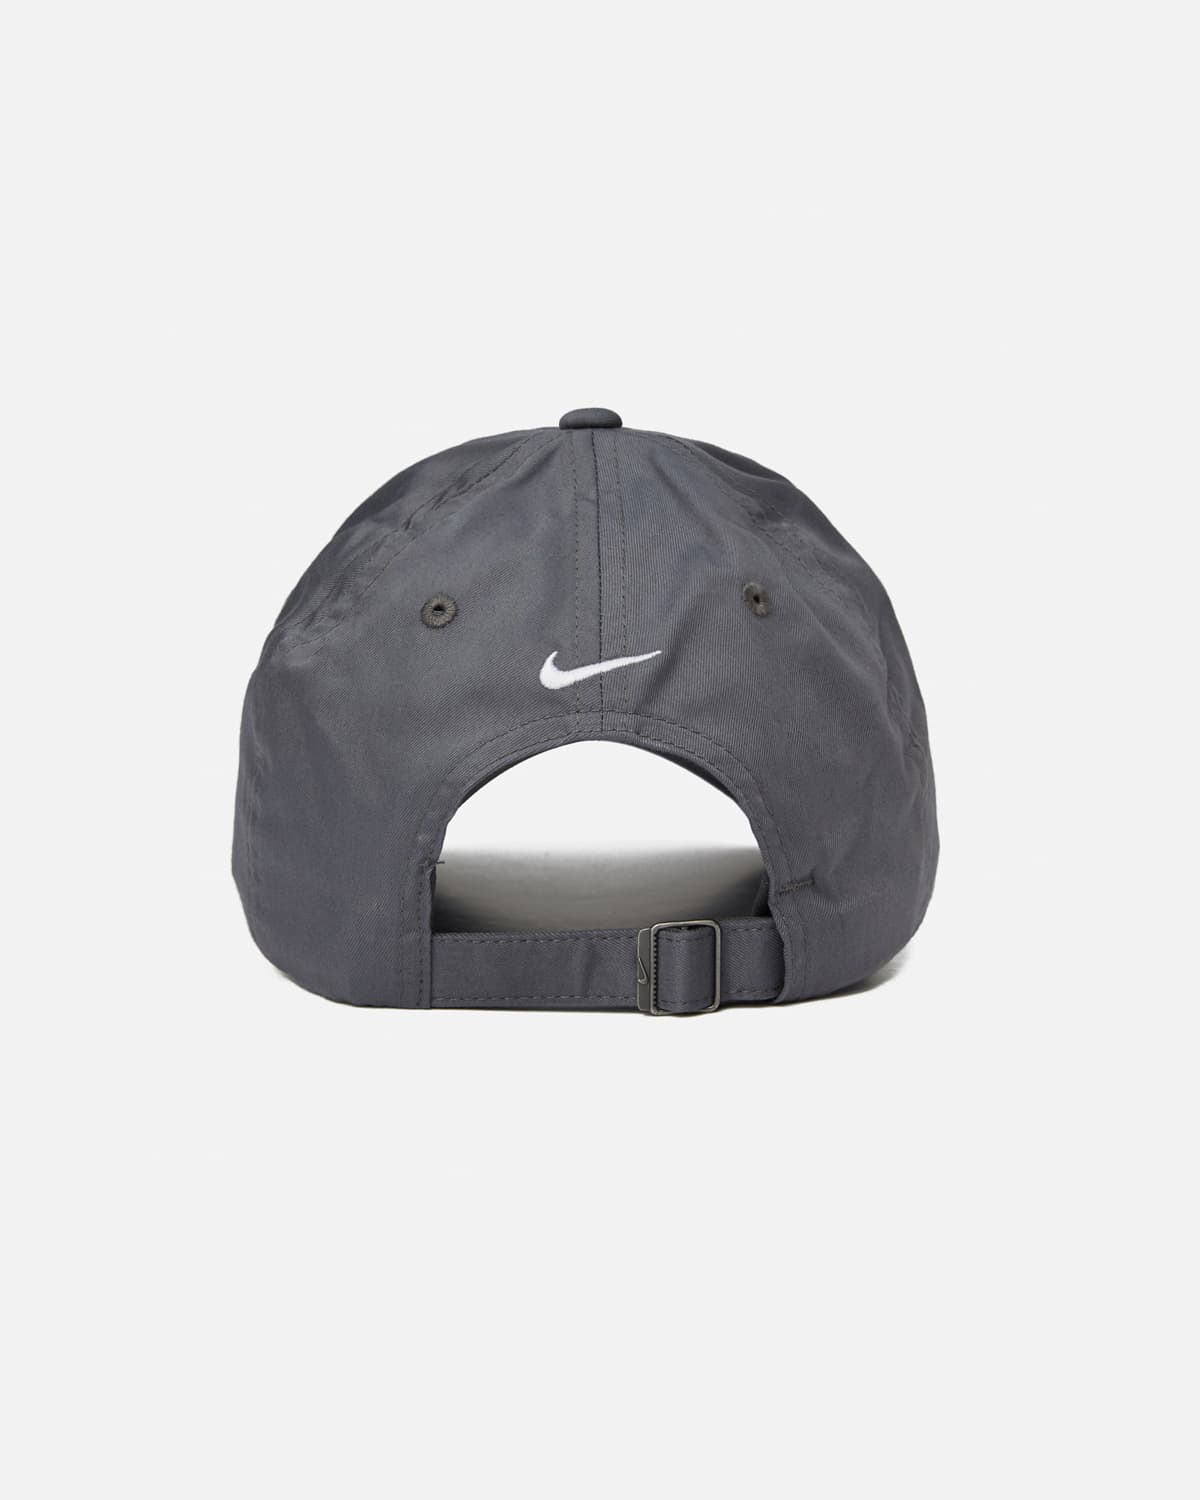 MrBeast 'Beast' Nike Dad Hat - Dark 